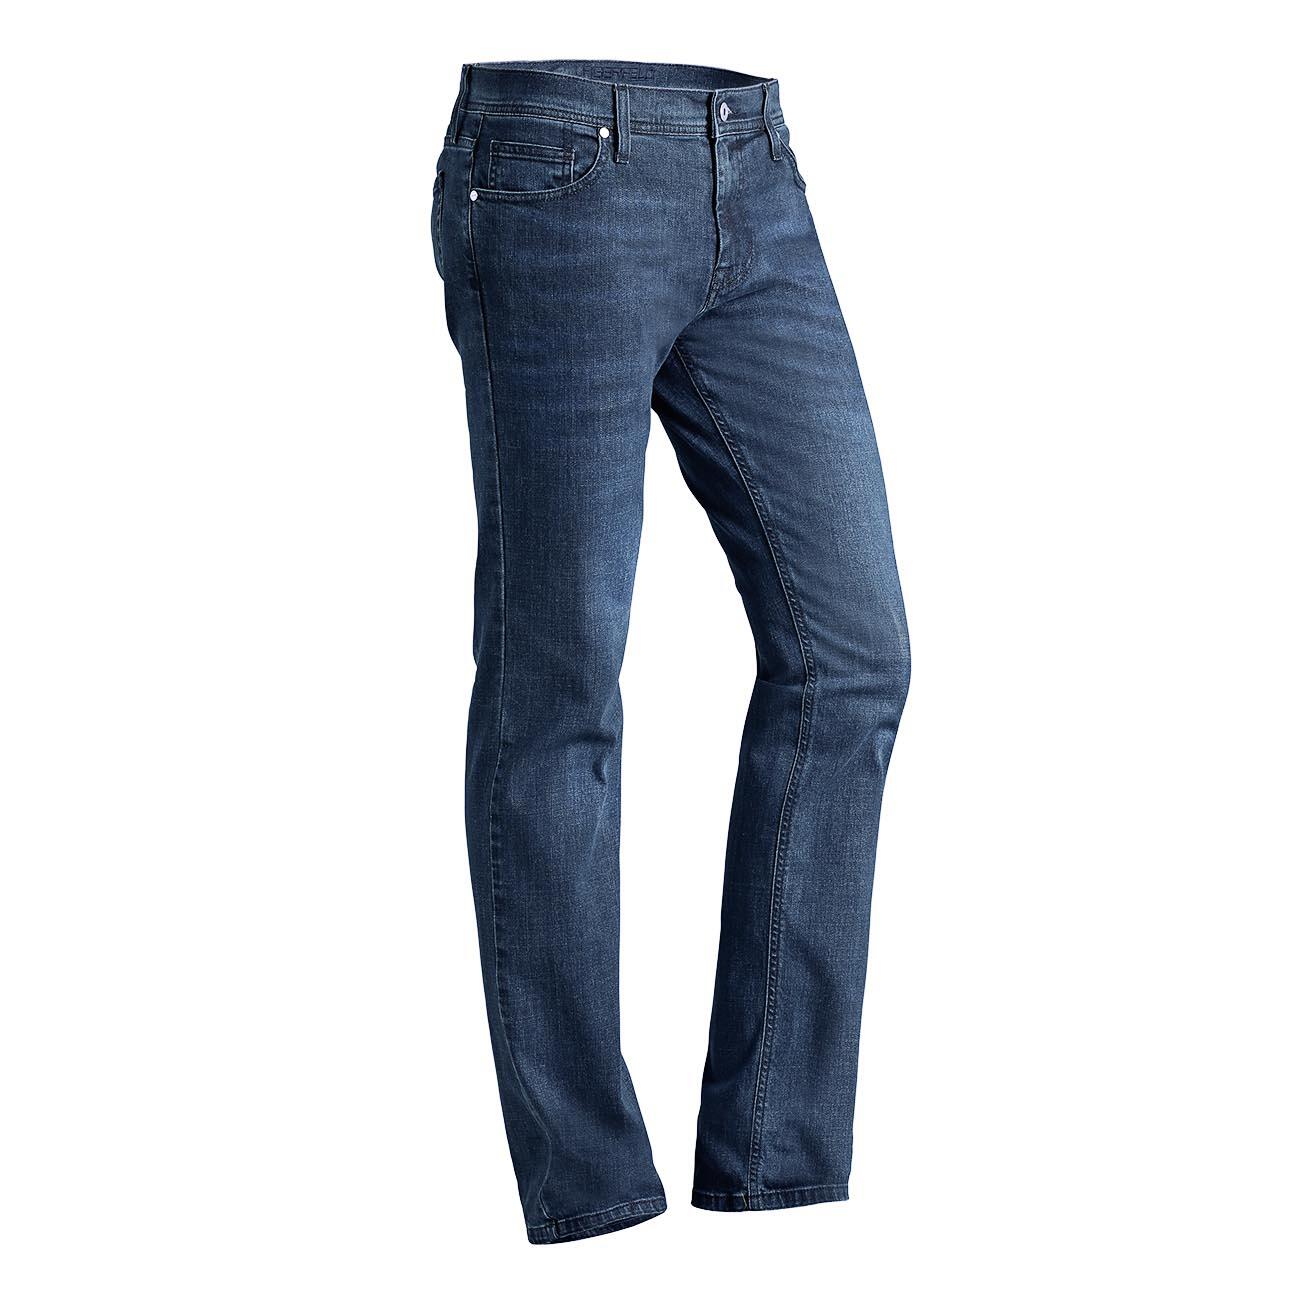 lagerfeld jeans